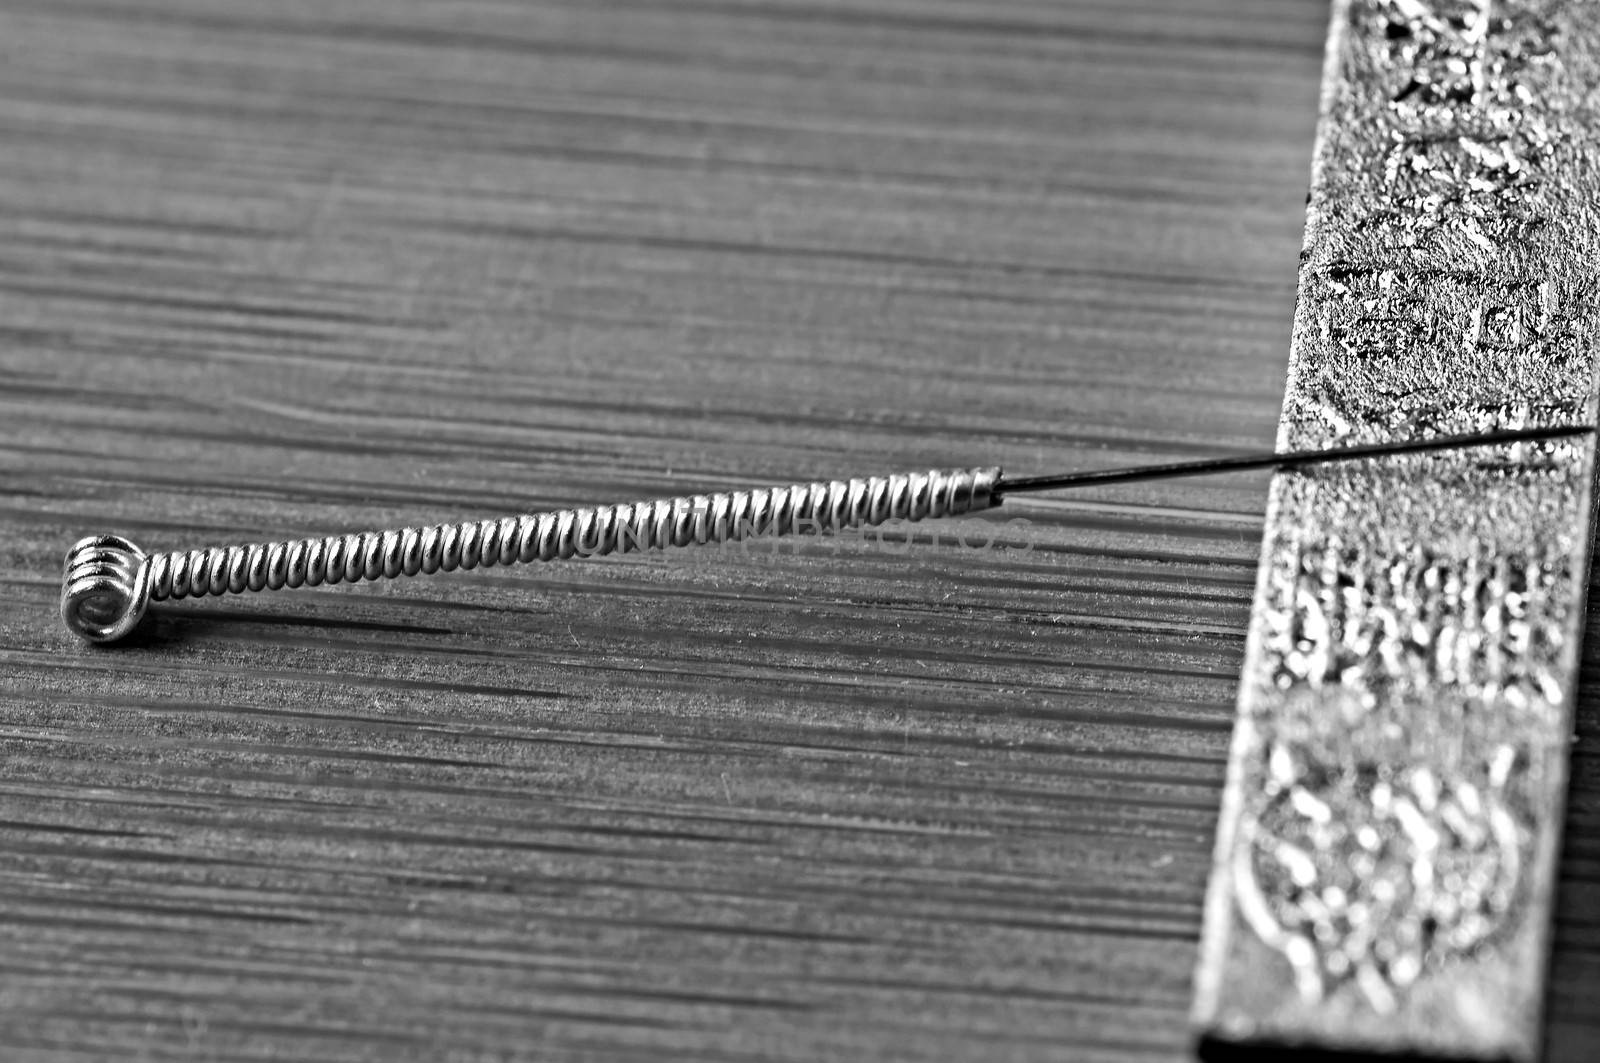 acupuncture needles by Jochen